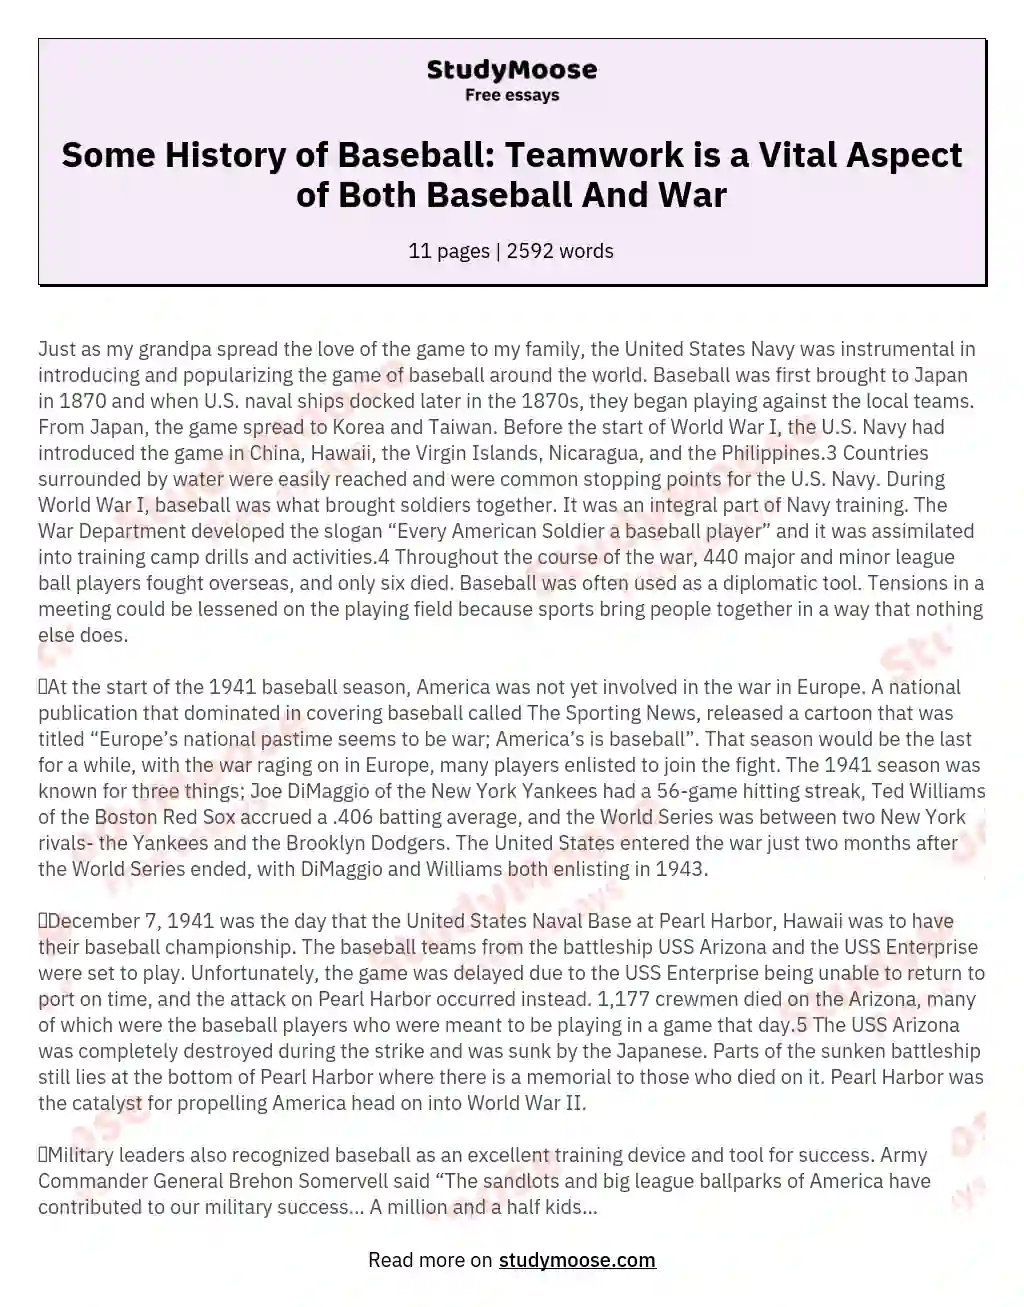 Some History of Baseball: Teamwork is a Vital Aspect of Both Baseball And War essay